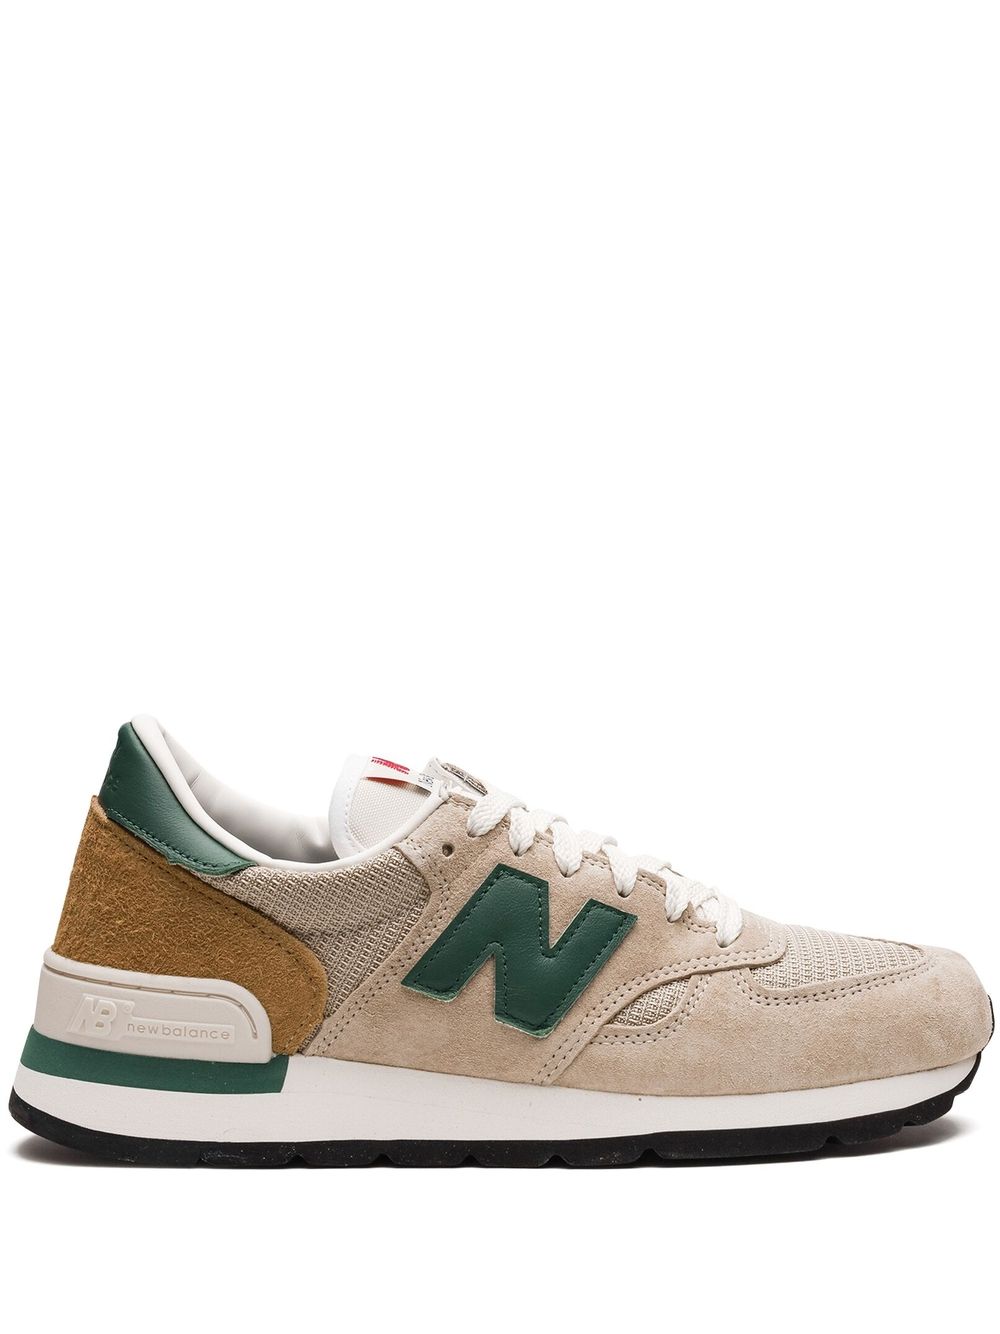 New Balance x Teddy Santis 990 "Tan Green" sneakers - Neutrals